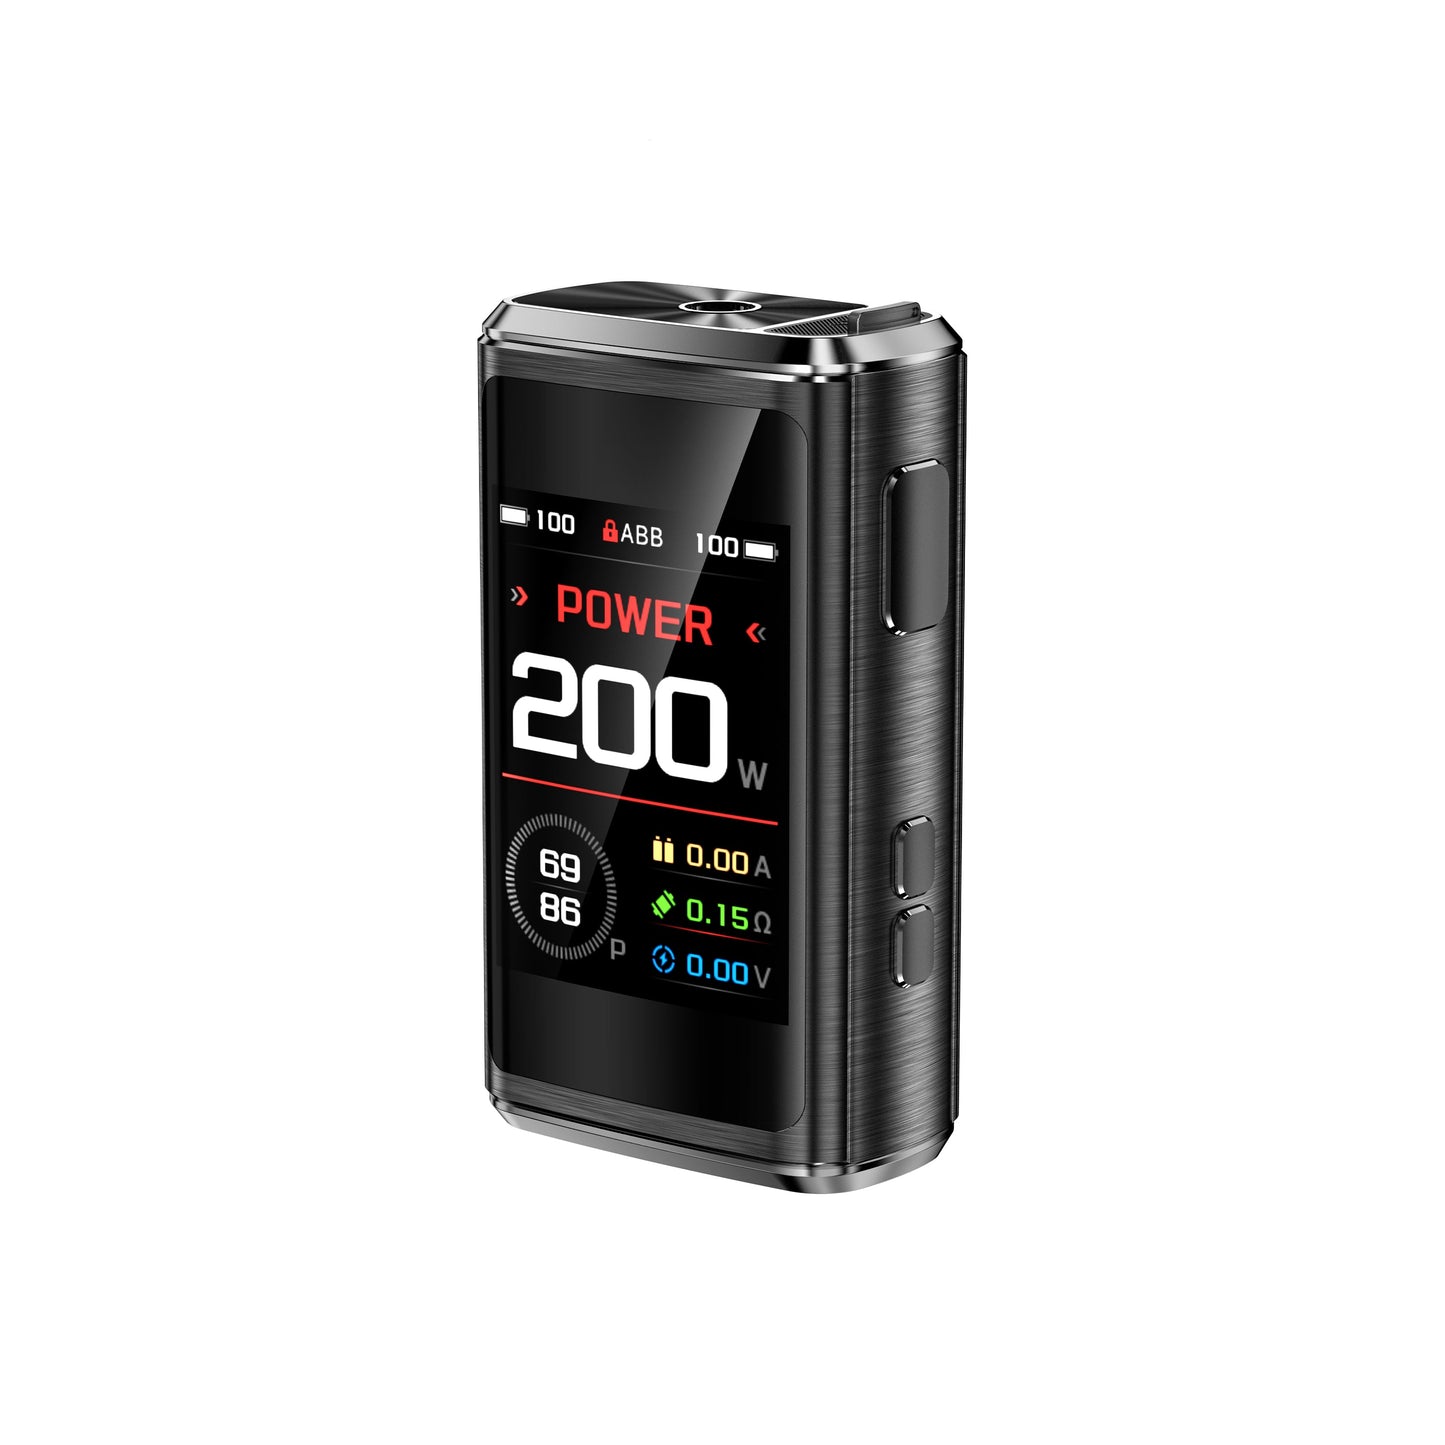 Geekvape Z200 (Zeus 200) Box Mod 200W Best Sales Price - Vape Battery